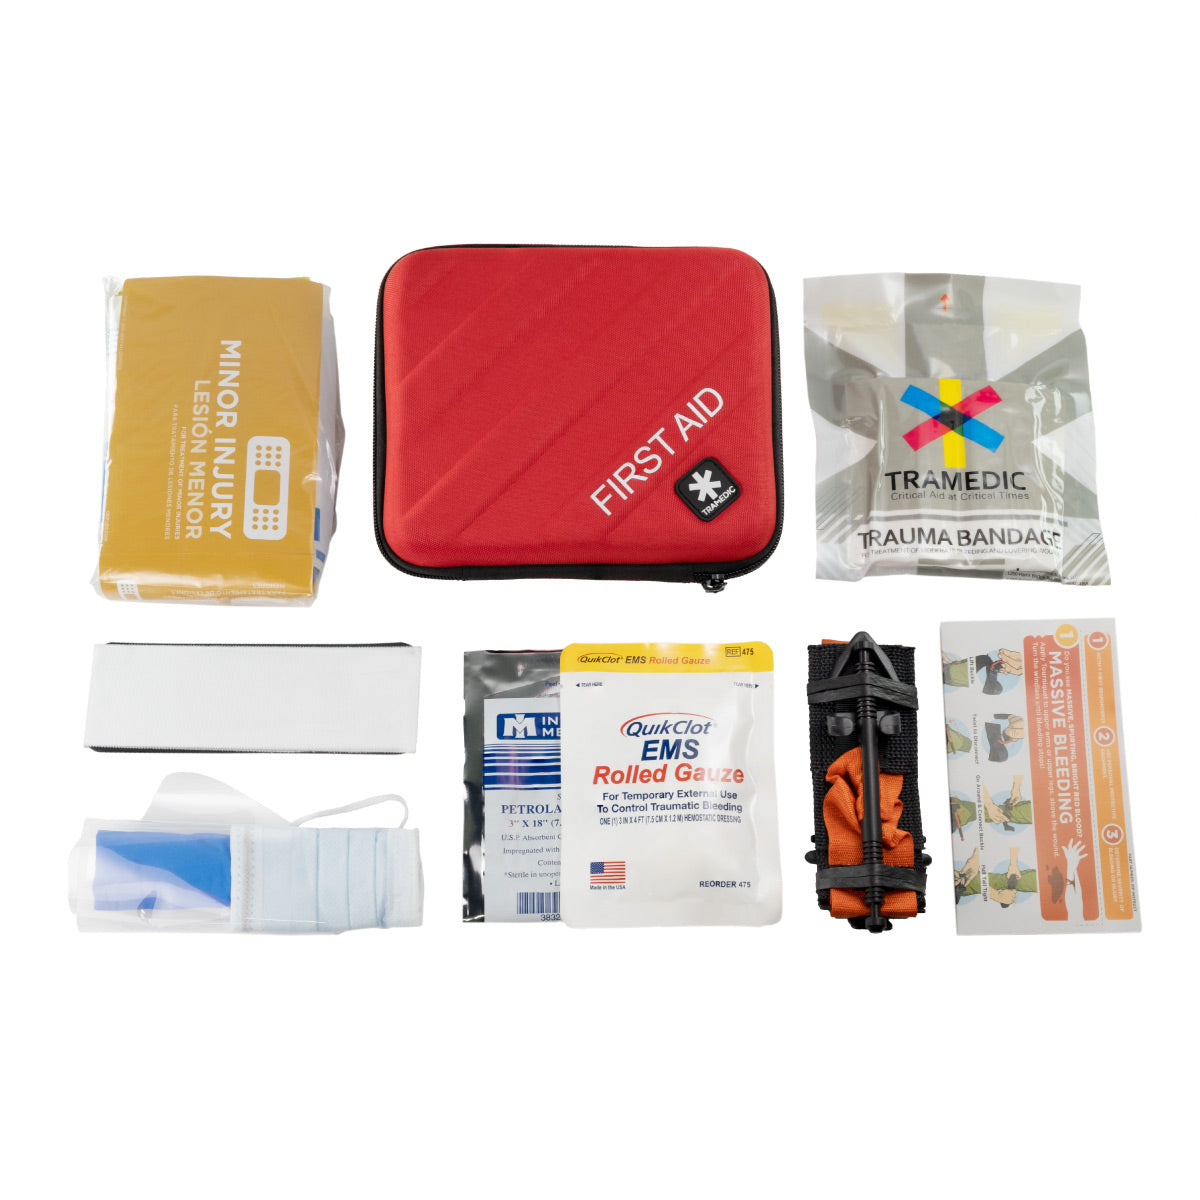 Tramedic® Individual Response Pack flat lay of kit contents